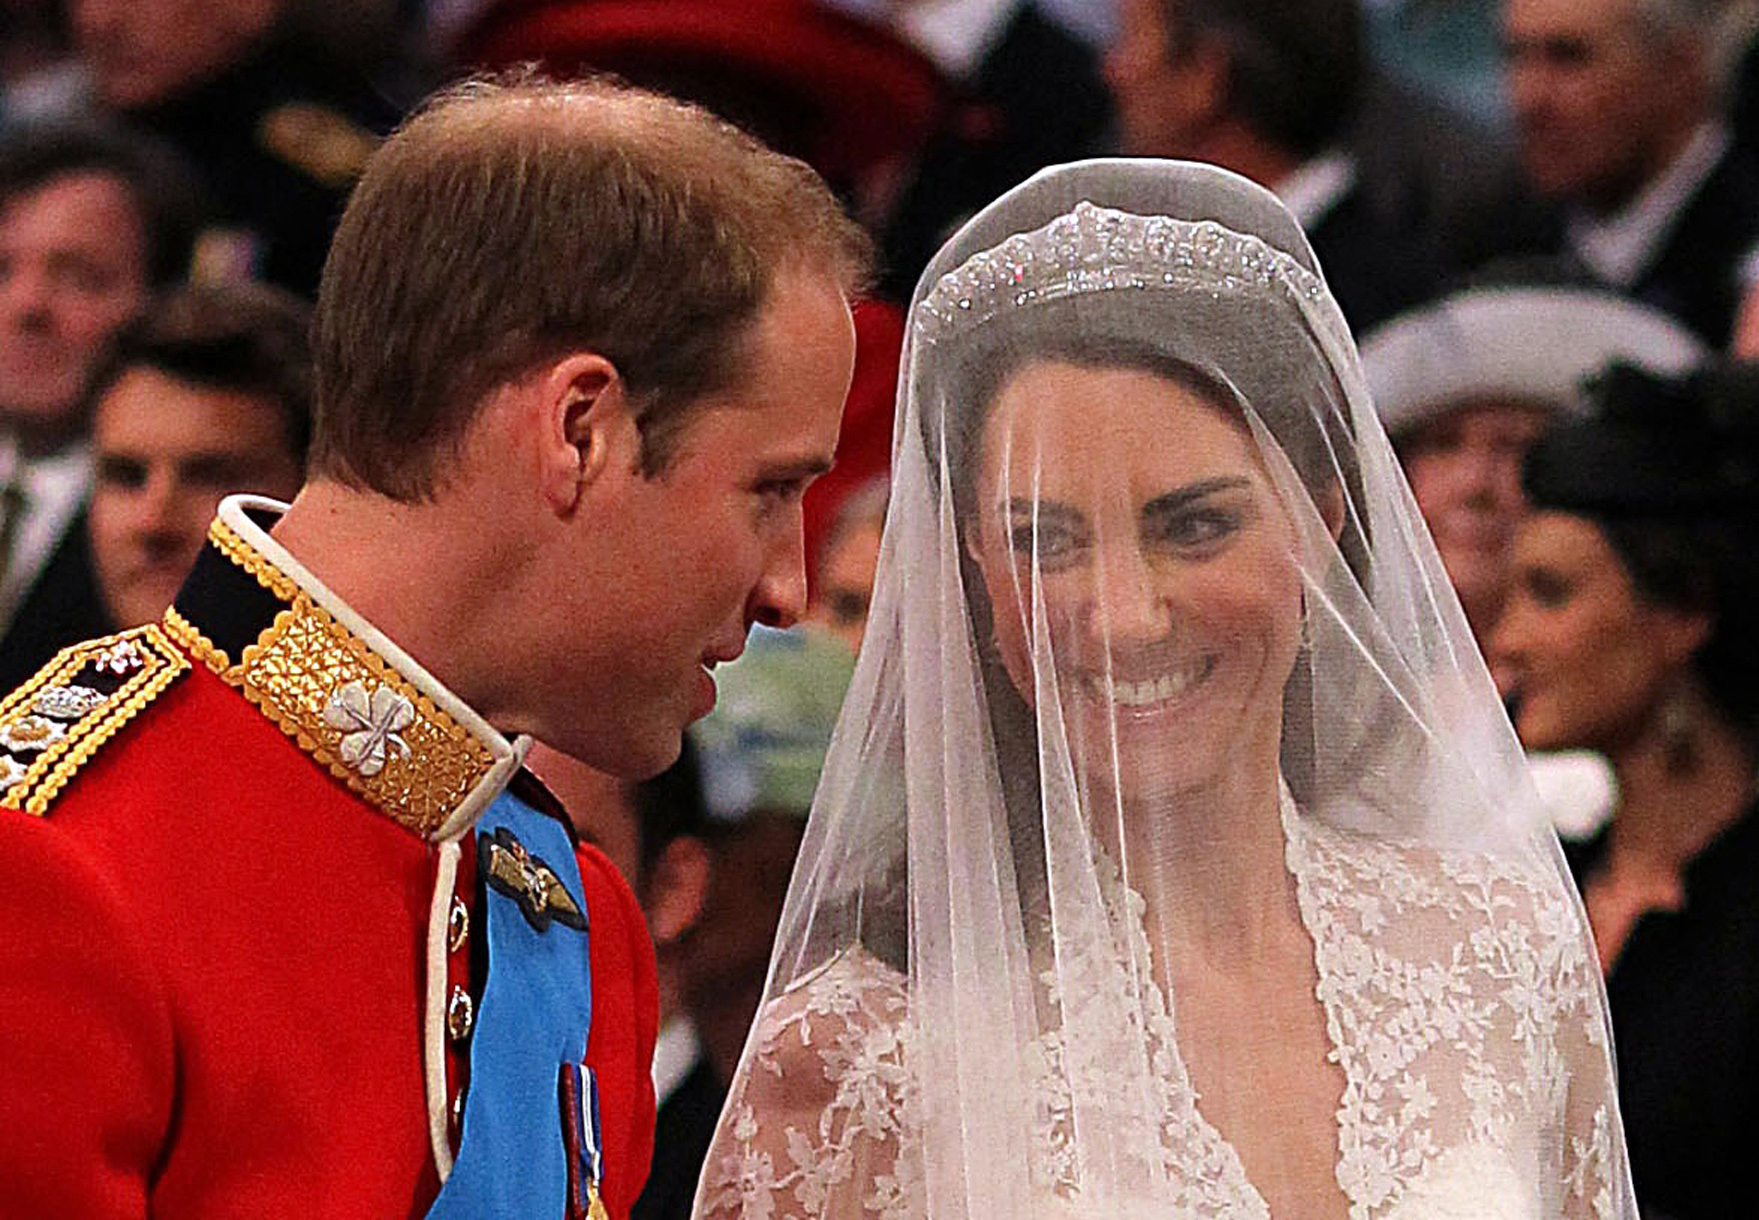 Myths about royal wedding dresses... shattered